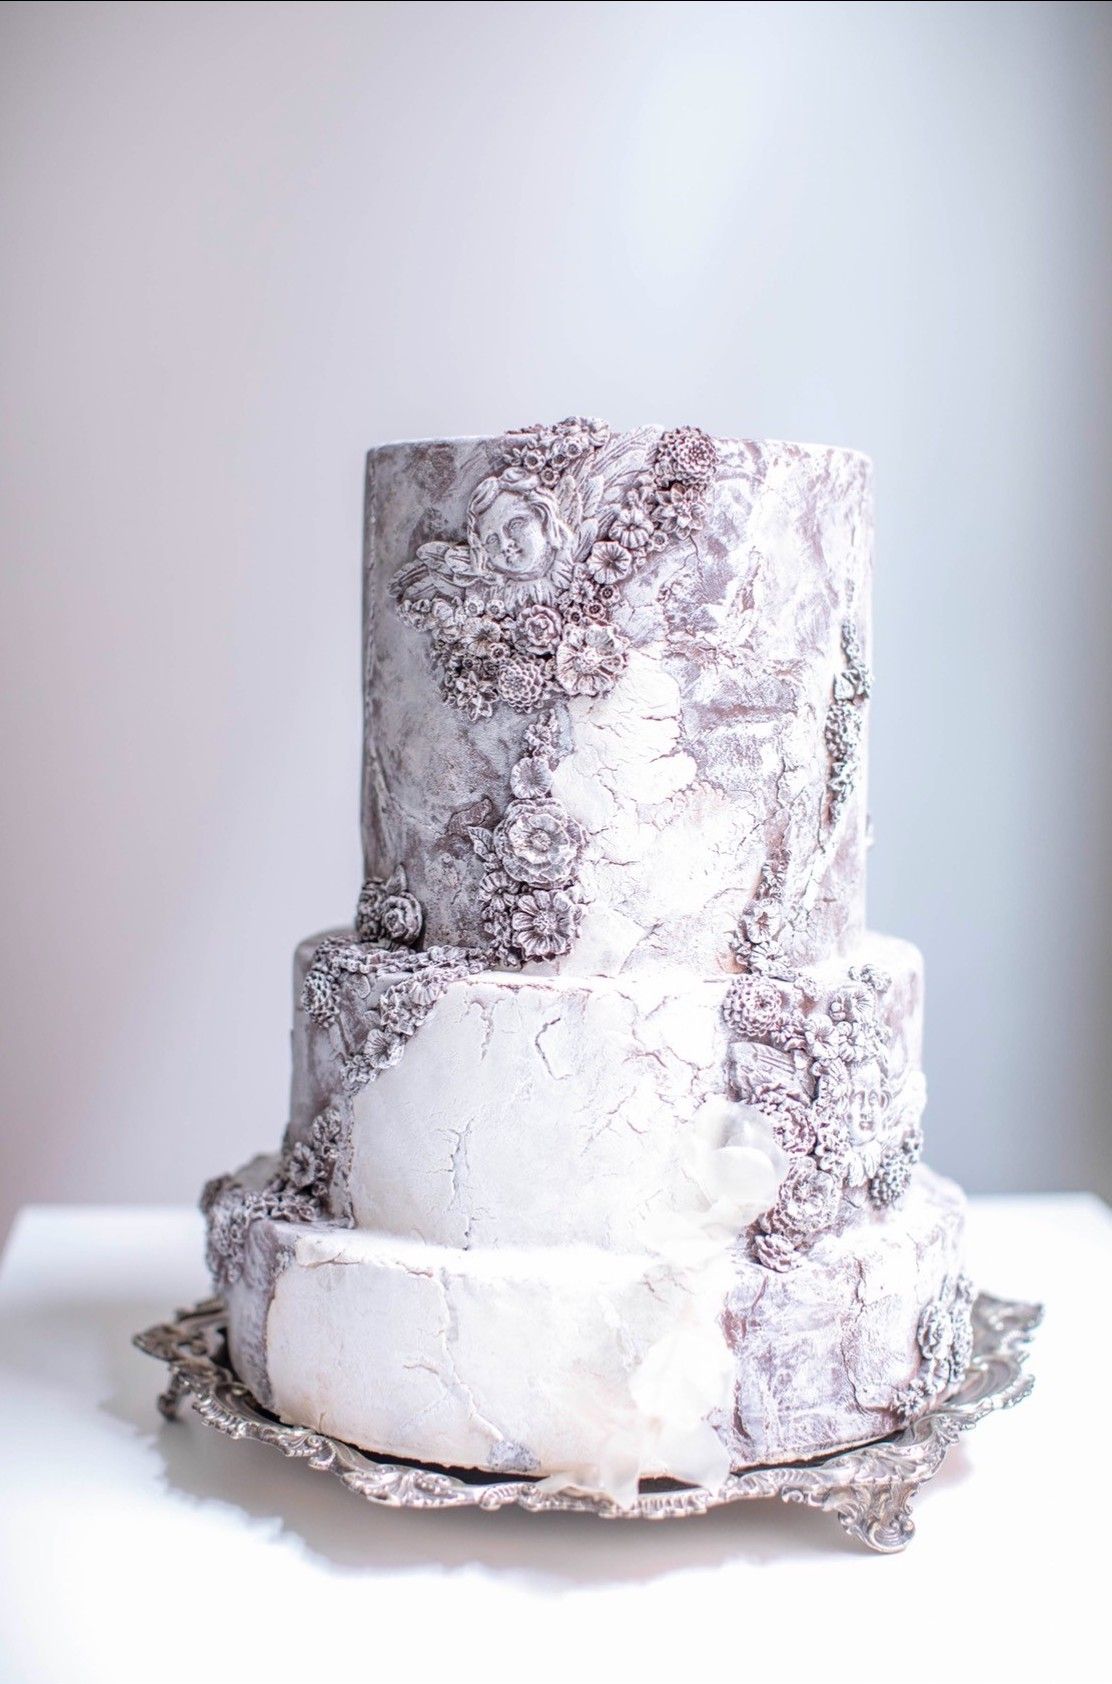 A fine art wedding cake and dessert table shop - Sweet Celebrations